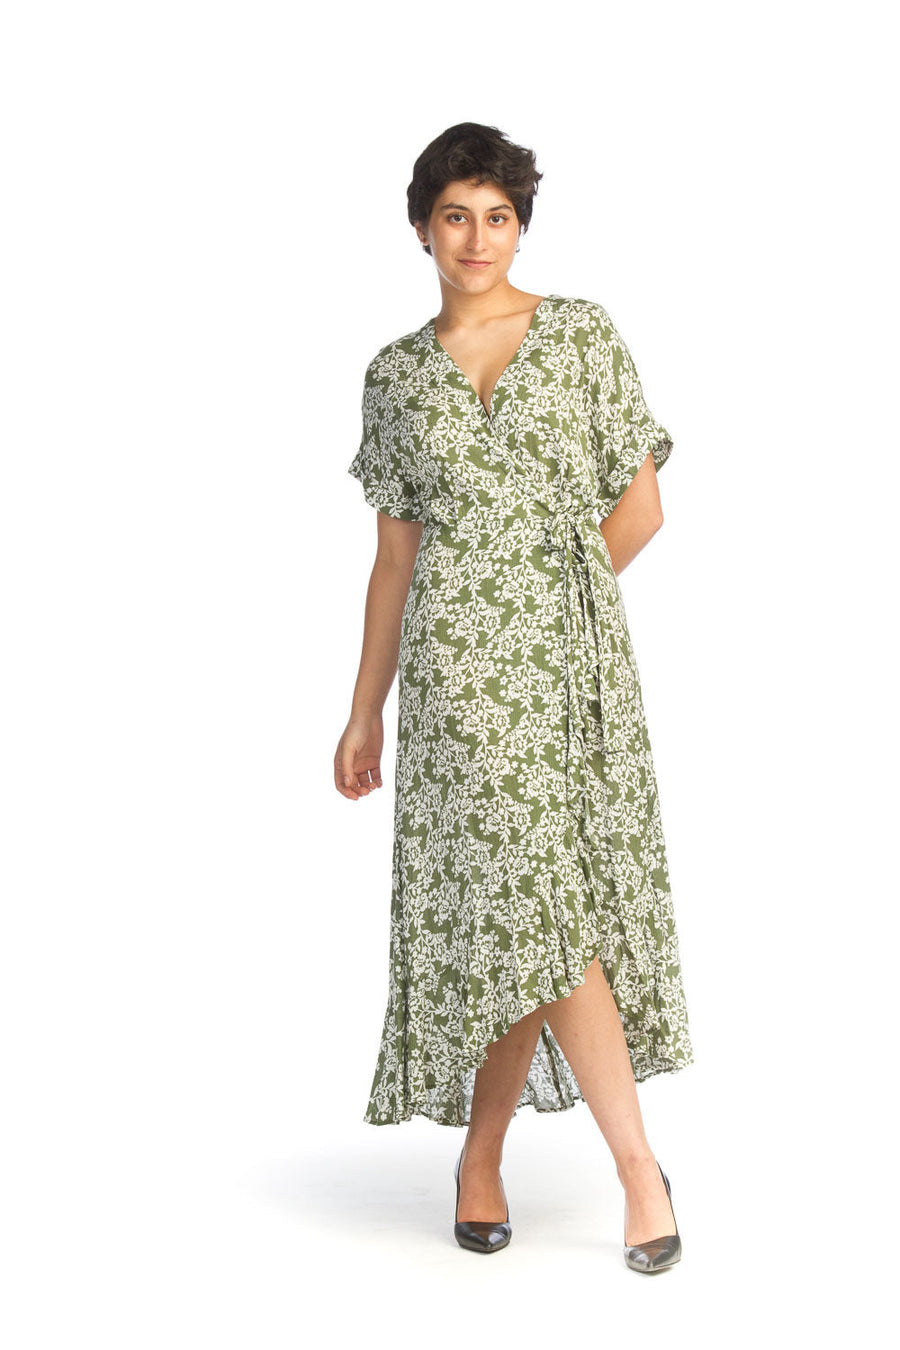 Papillon PD-14557 Floral Crinkle Wrap Dress - Green